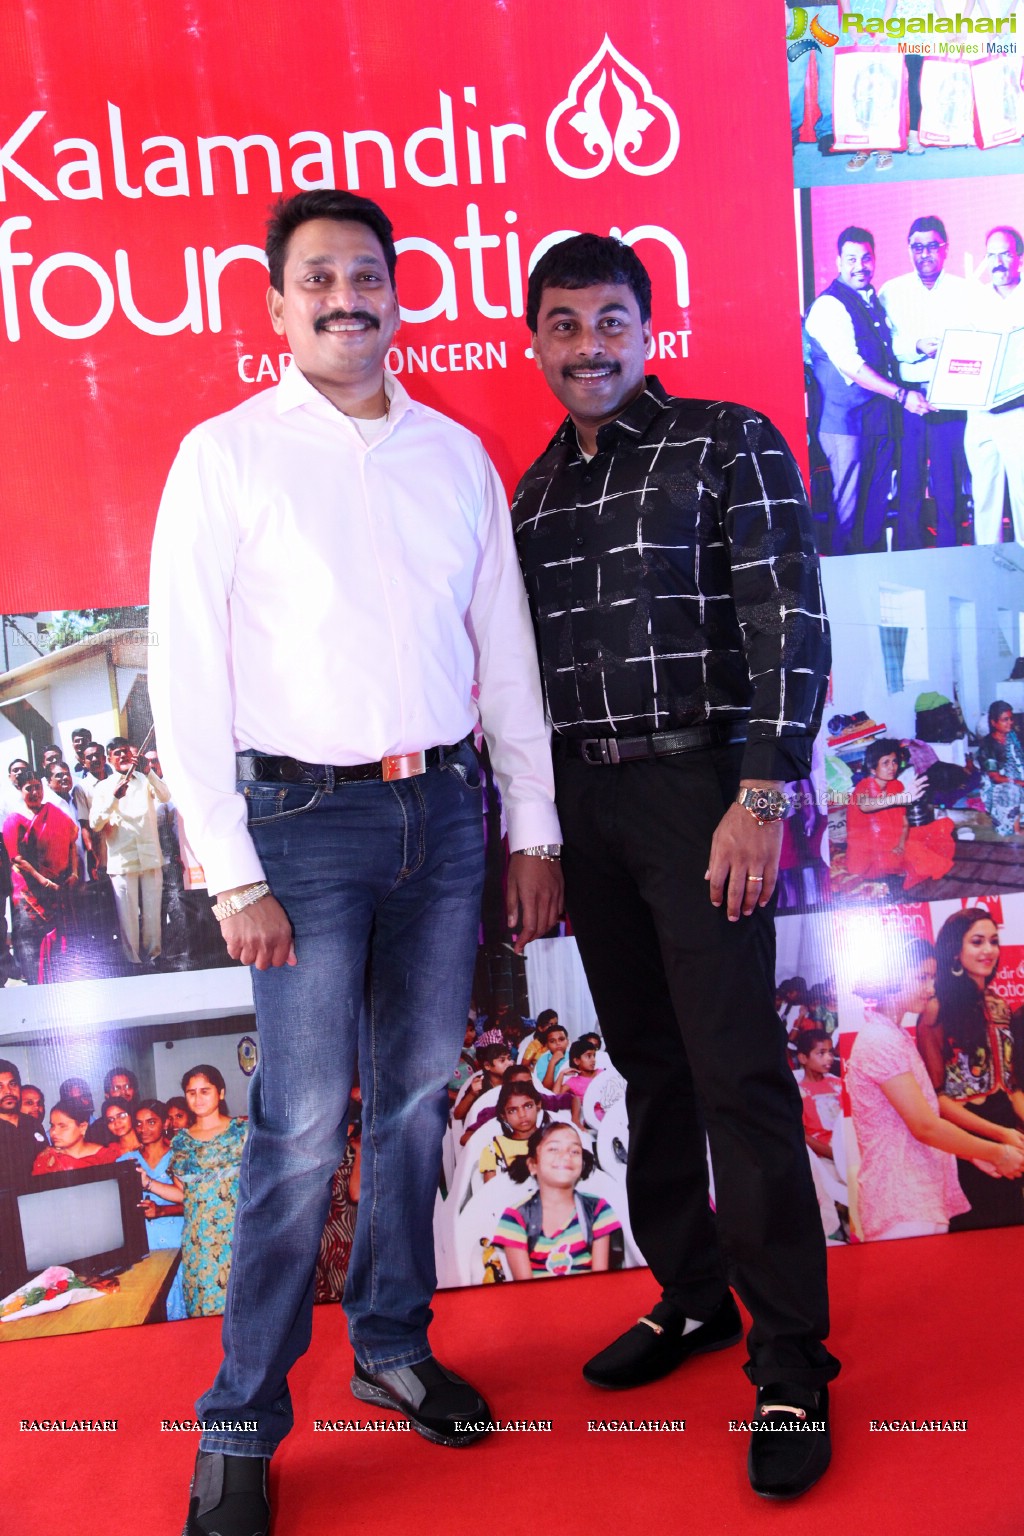 Kalamandir Foundation 7th Anniversary Celebrations at Cybercity Convention Center, Hyderabad